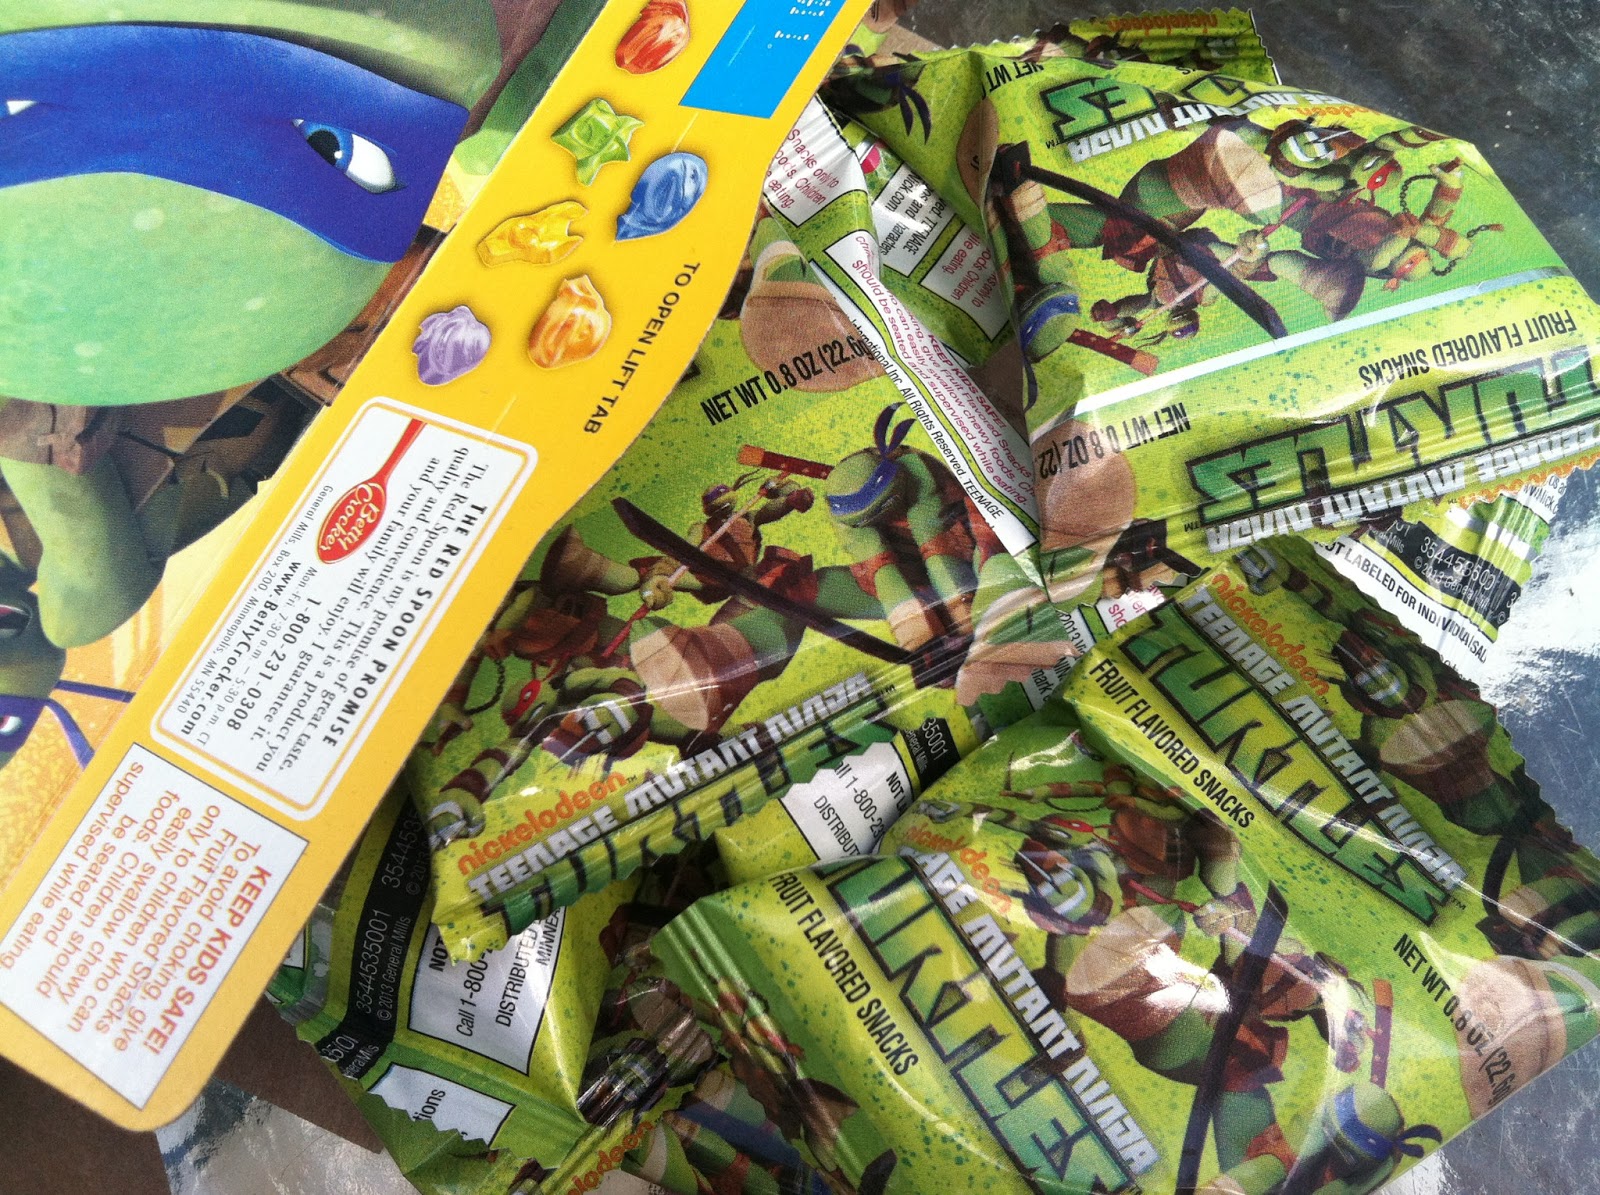 Betty Crocker Fruit Snack Value Pack, Ninja Turtles